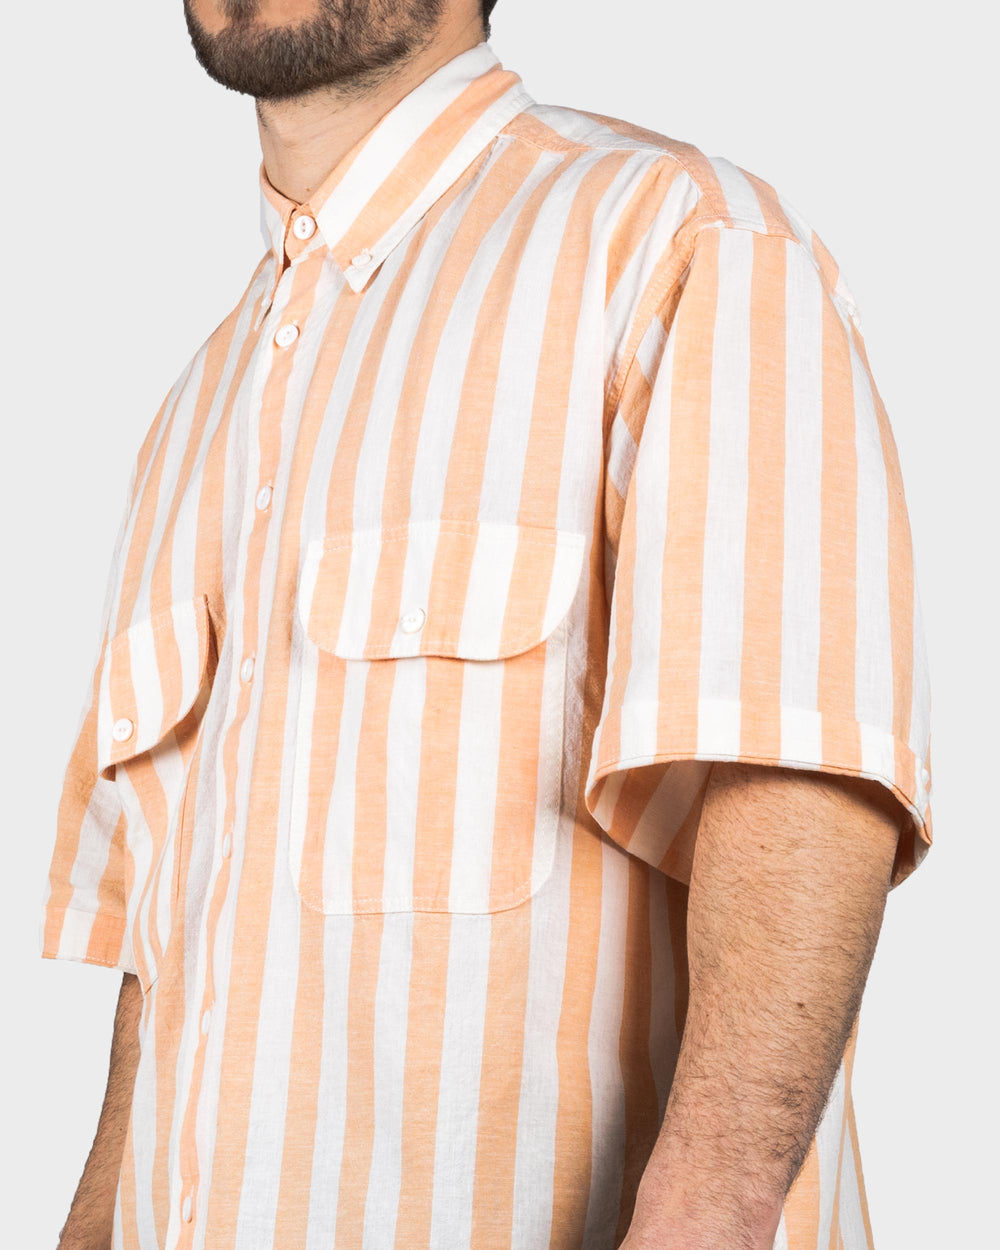 Levi's Vintage Clothing Diamond Shirt - Melon Orange White – The 5th Store